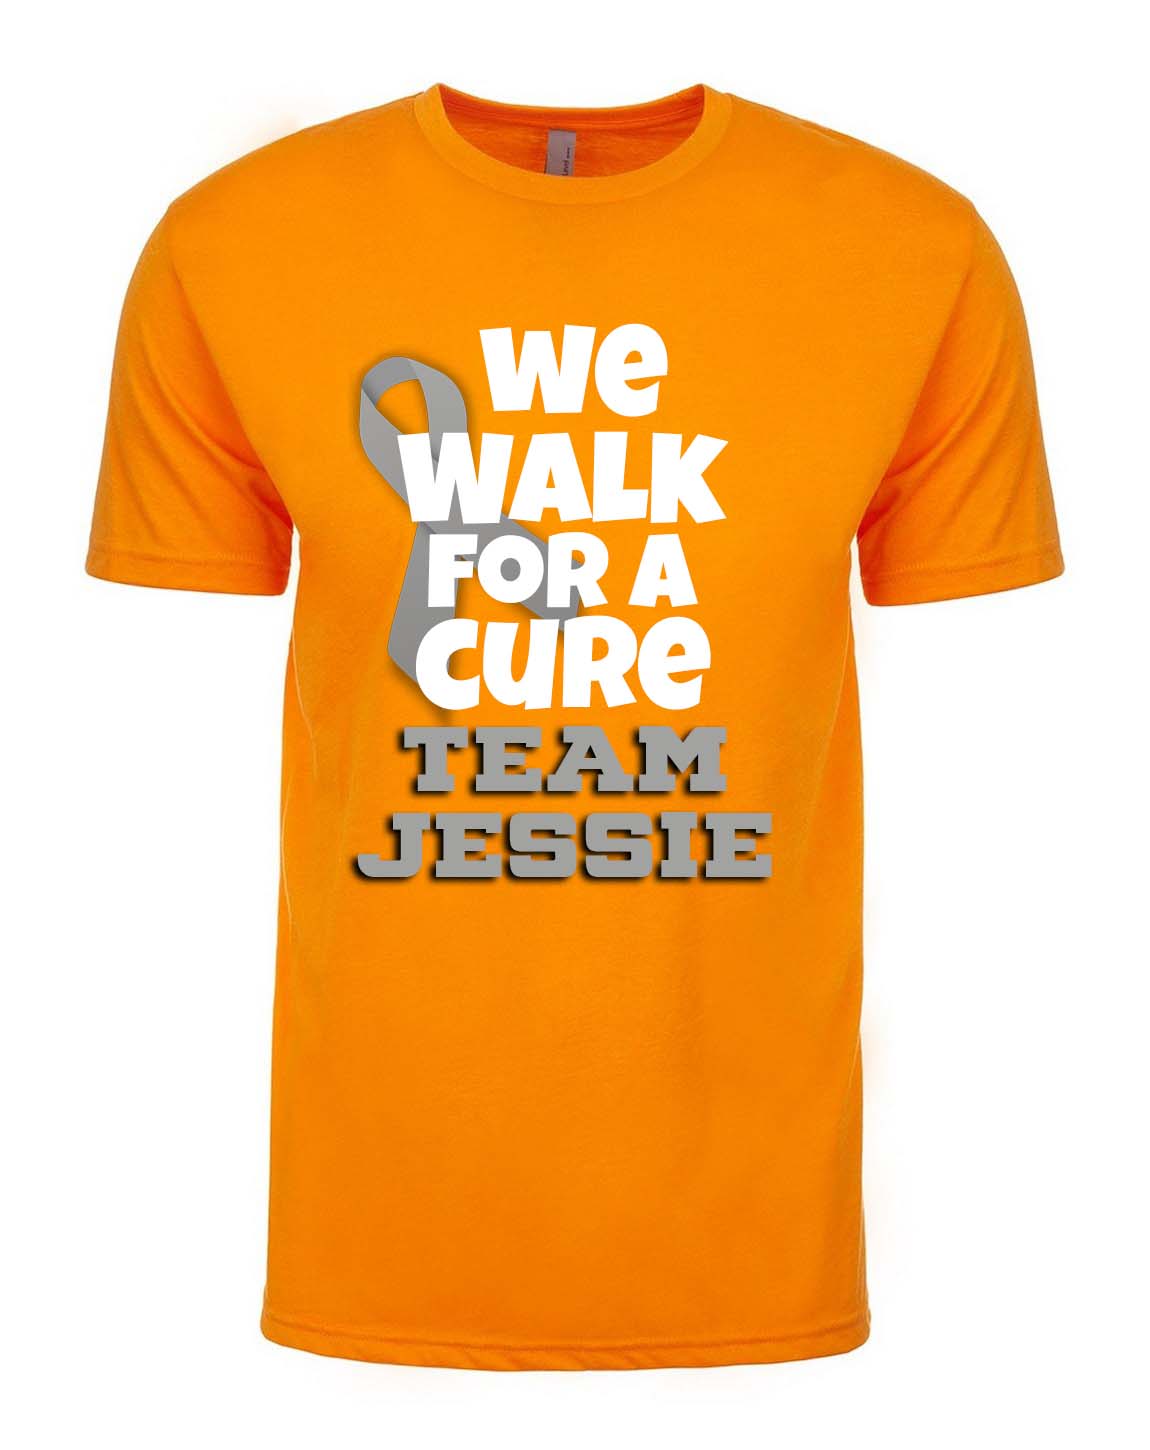 Walk for a cure T-shirt, Brain Cancer